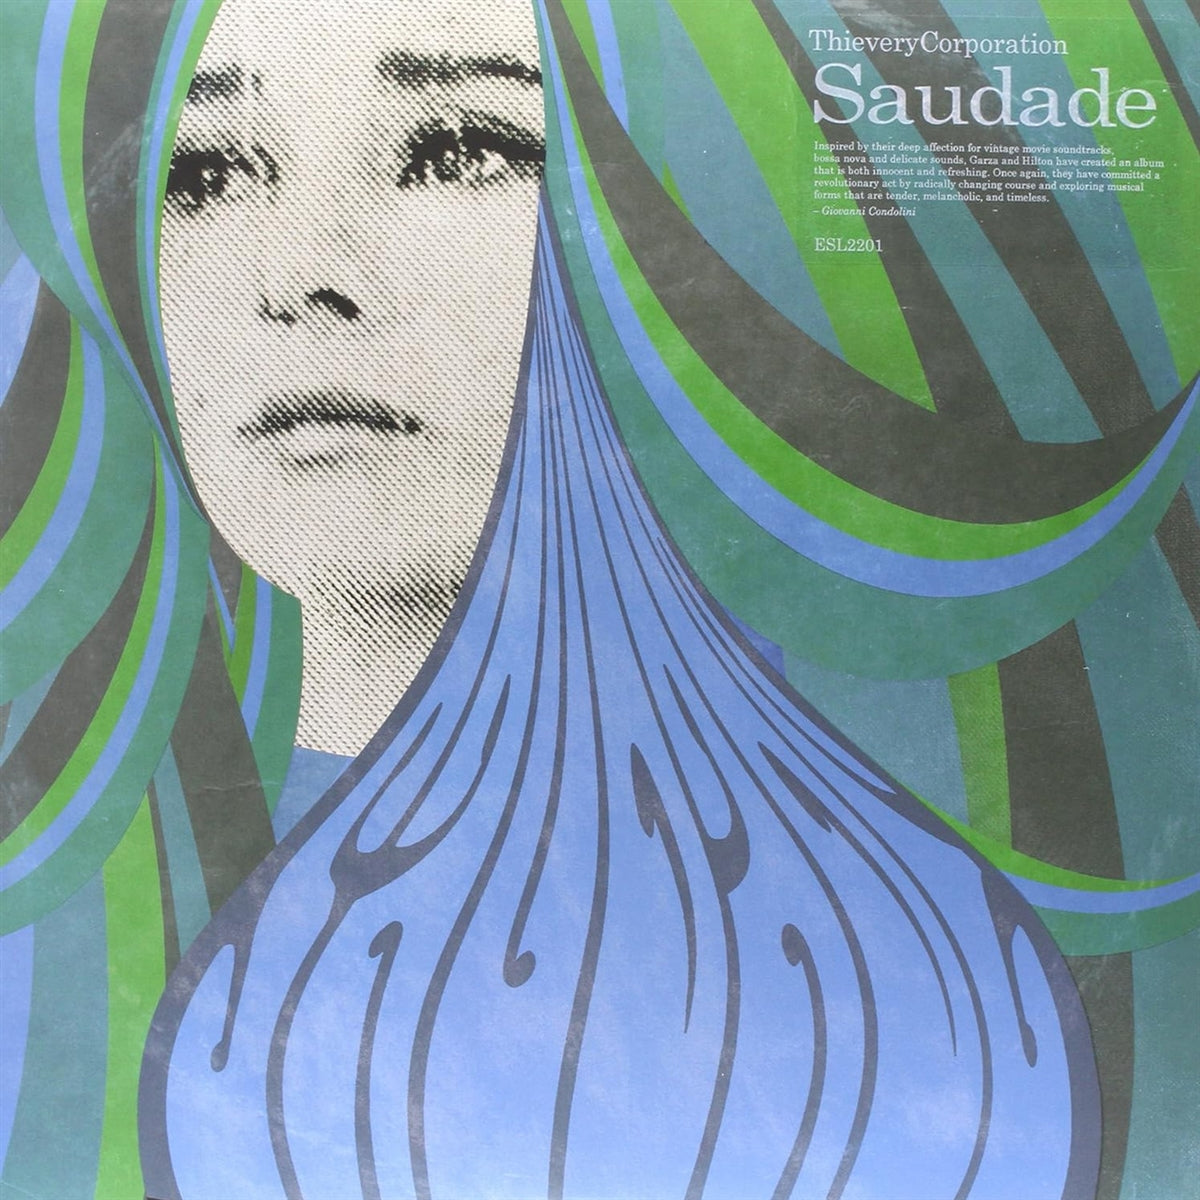 Thievery Corporation - Saudade LP (10th Anniversary, Clear Vinyl, Blue Colored Vinyl)